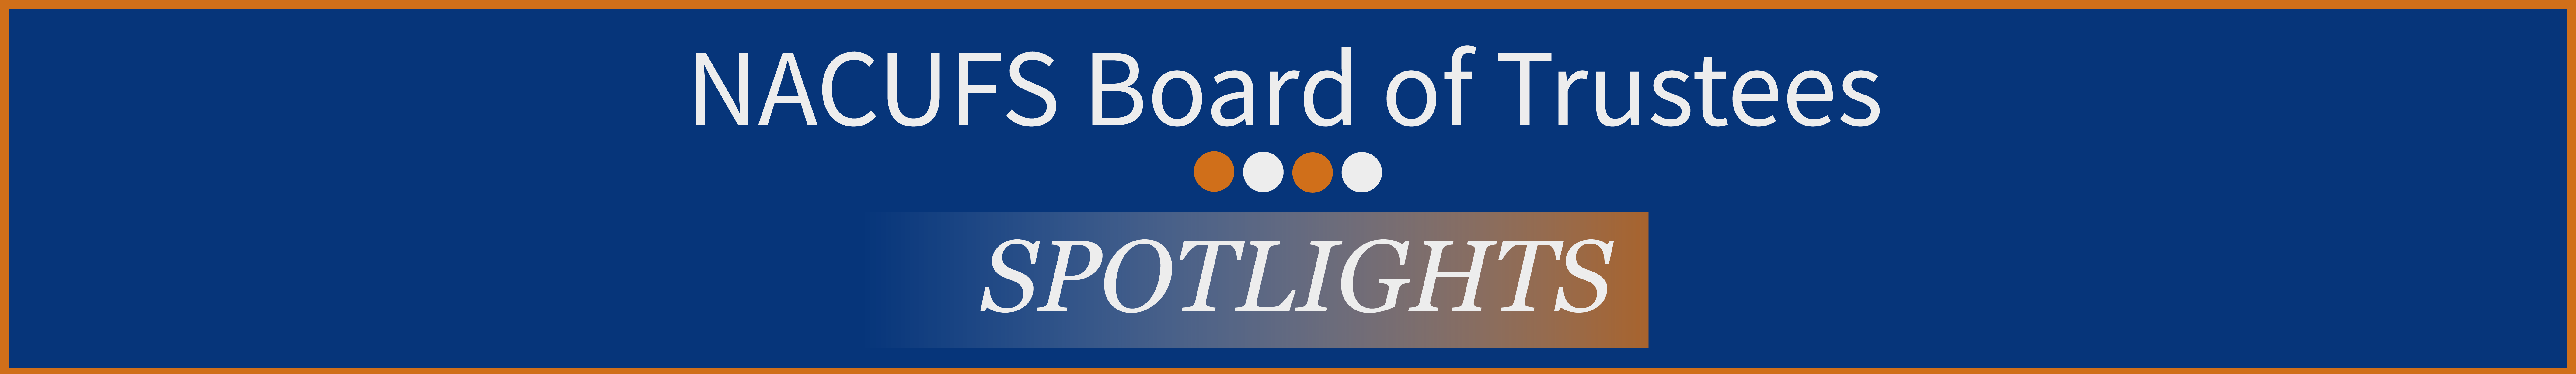 Board Spotlight Banner Middle Align